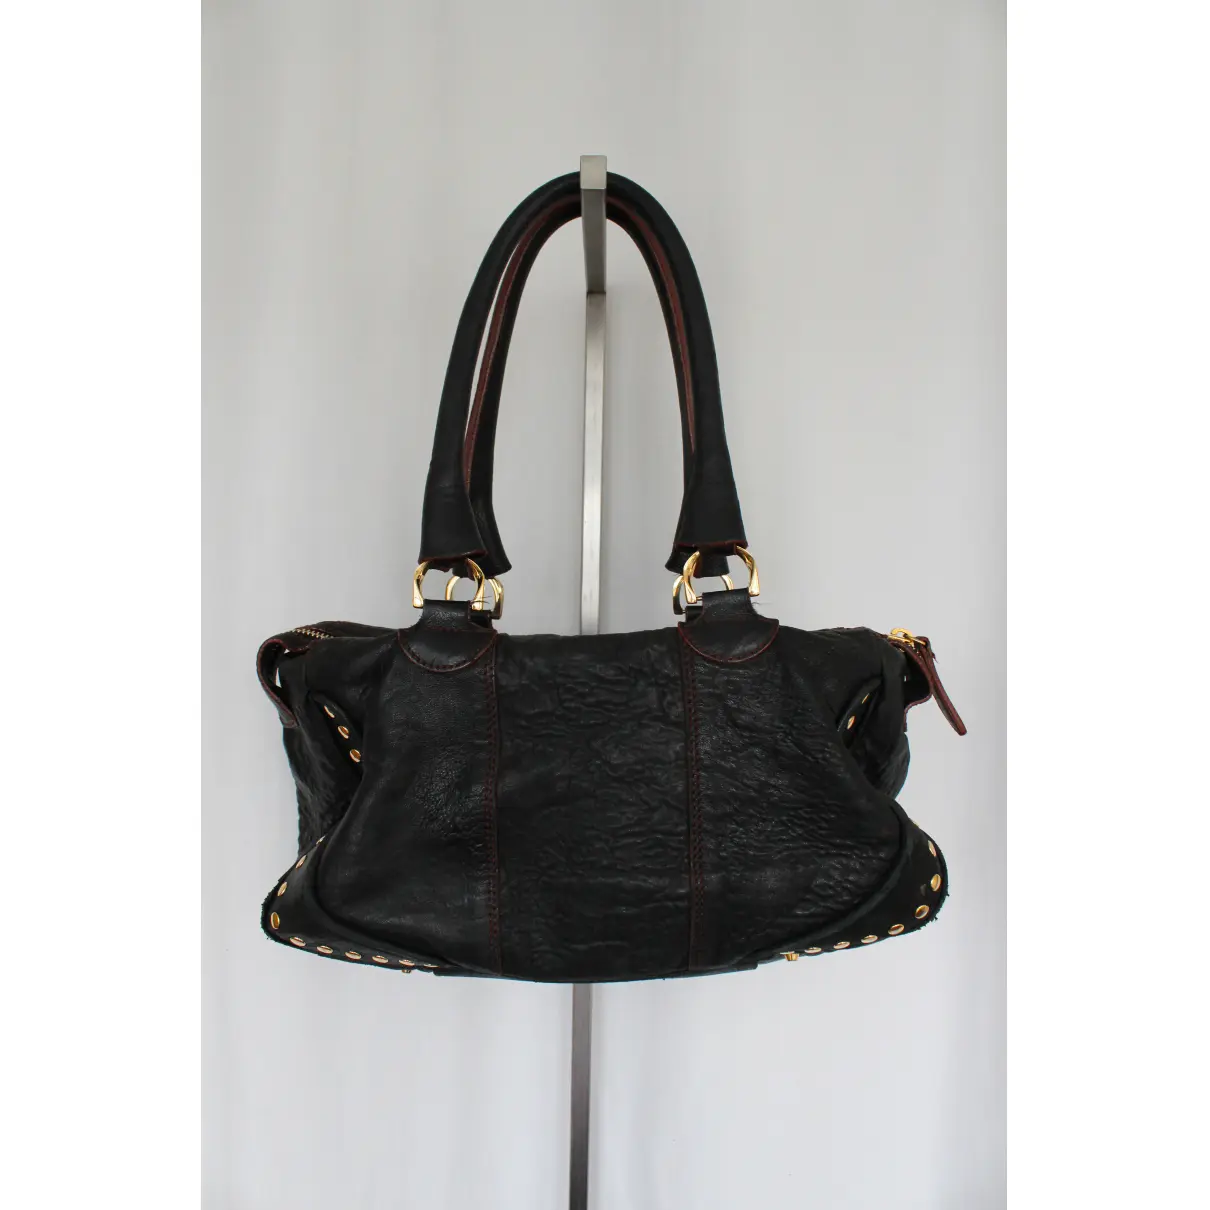 Luxury Corto Moltedo Handbags Women